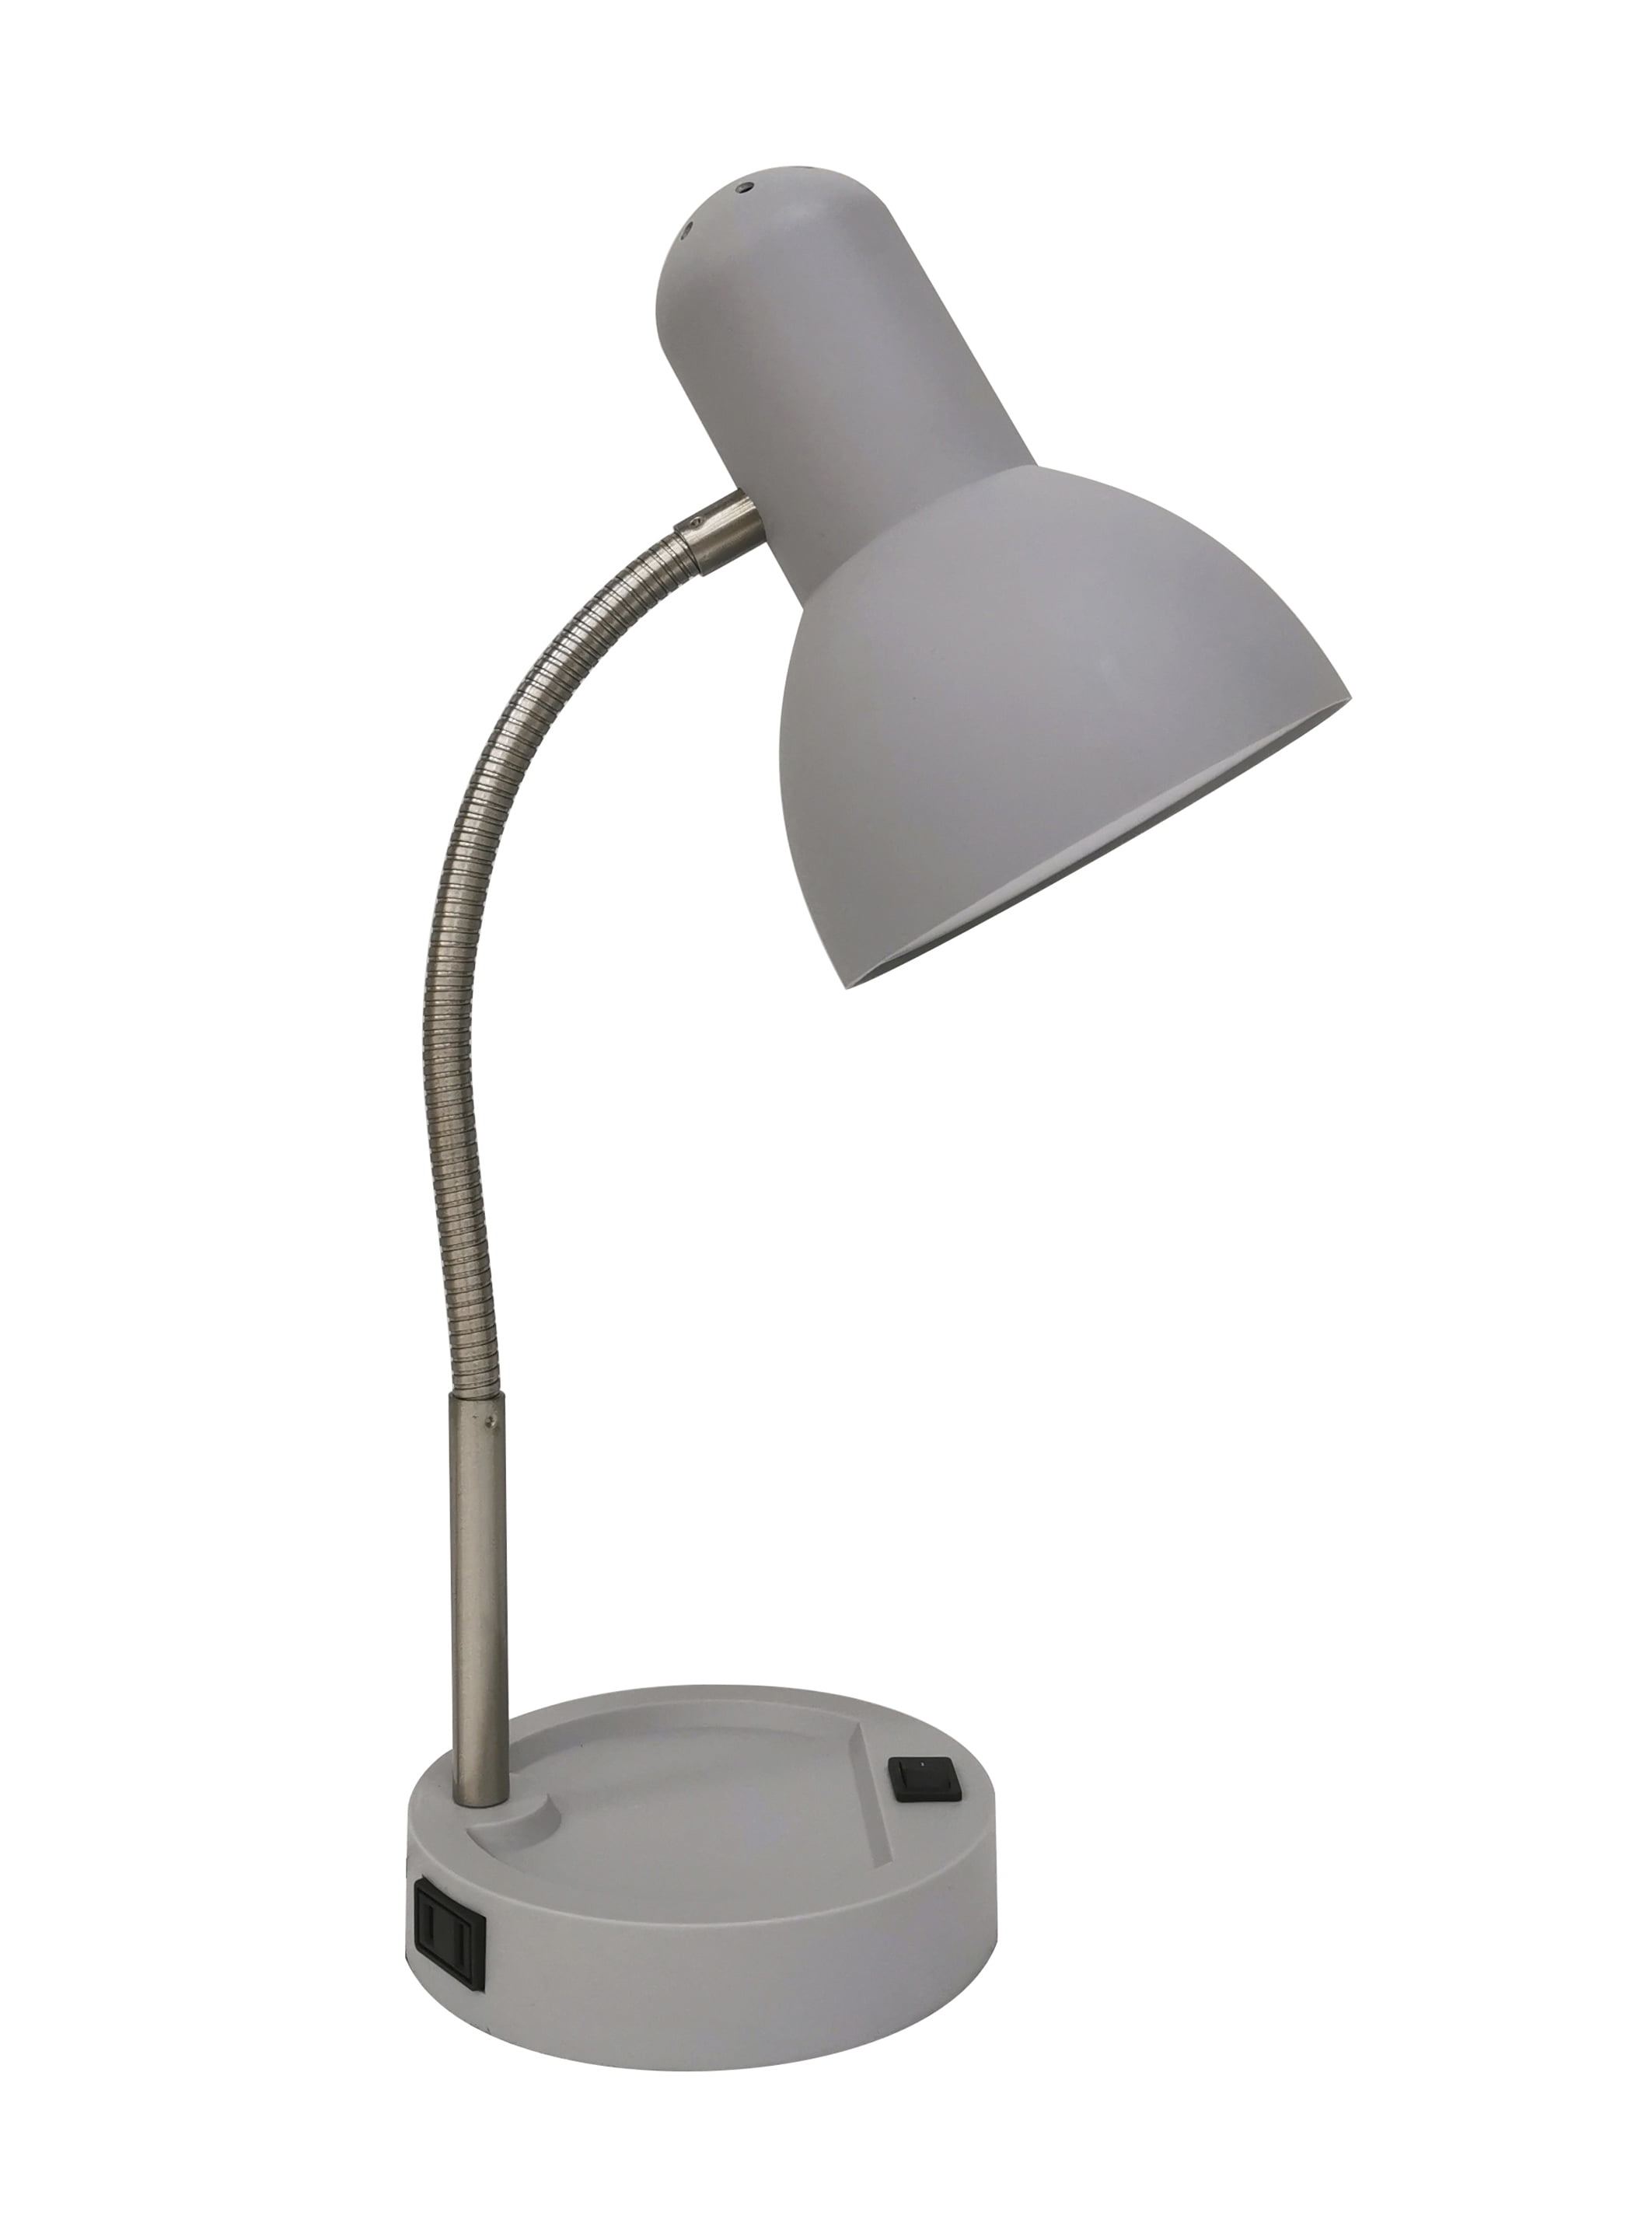  Desk Lamps - Gooseneck / Yellow / Desk Lamps / Lamps